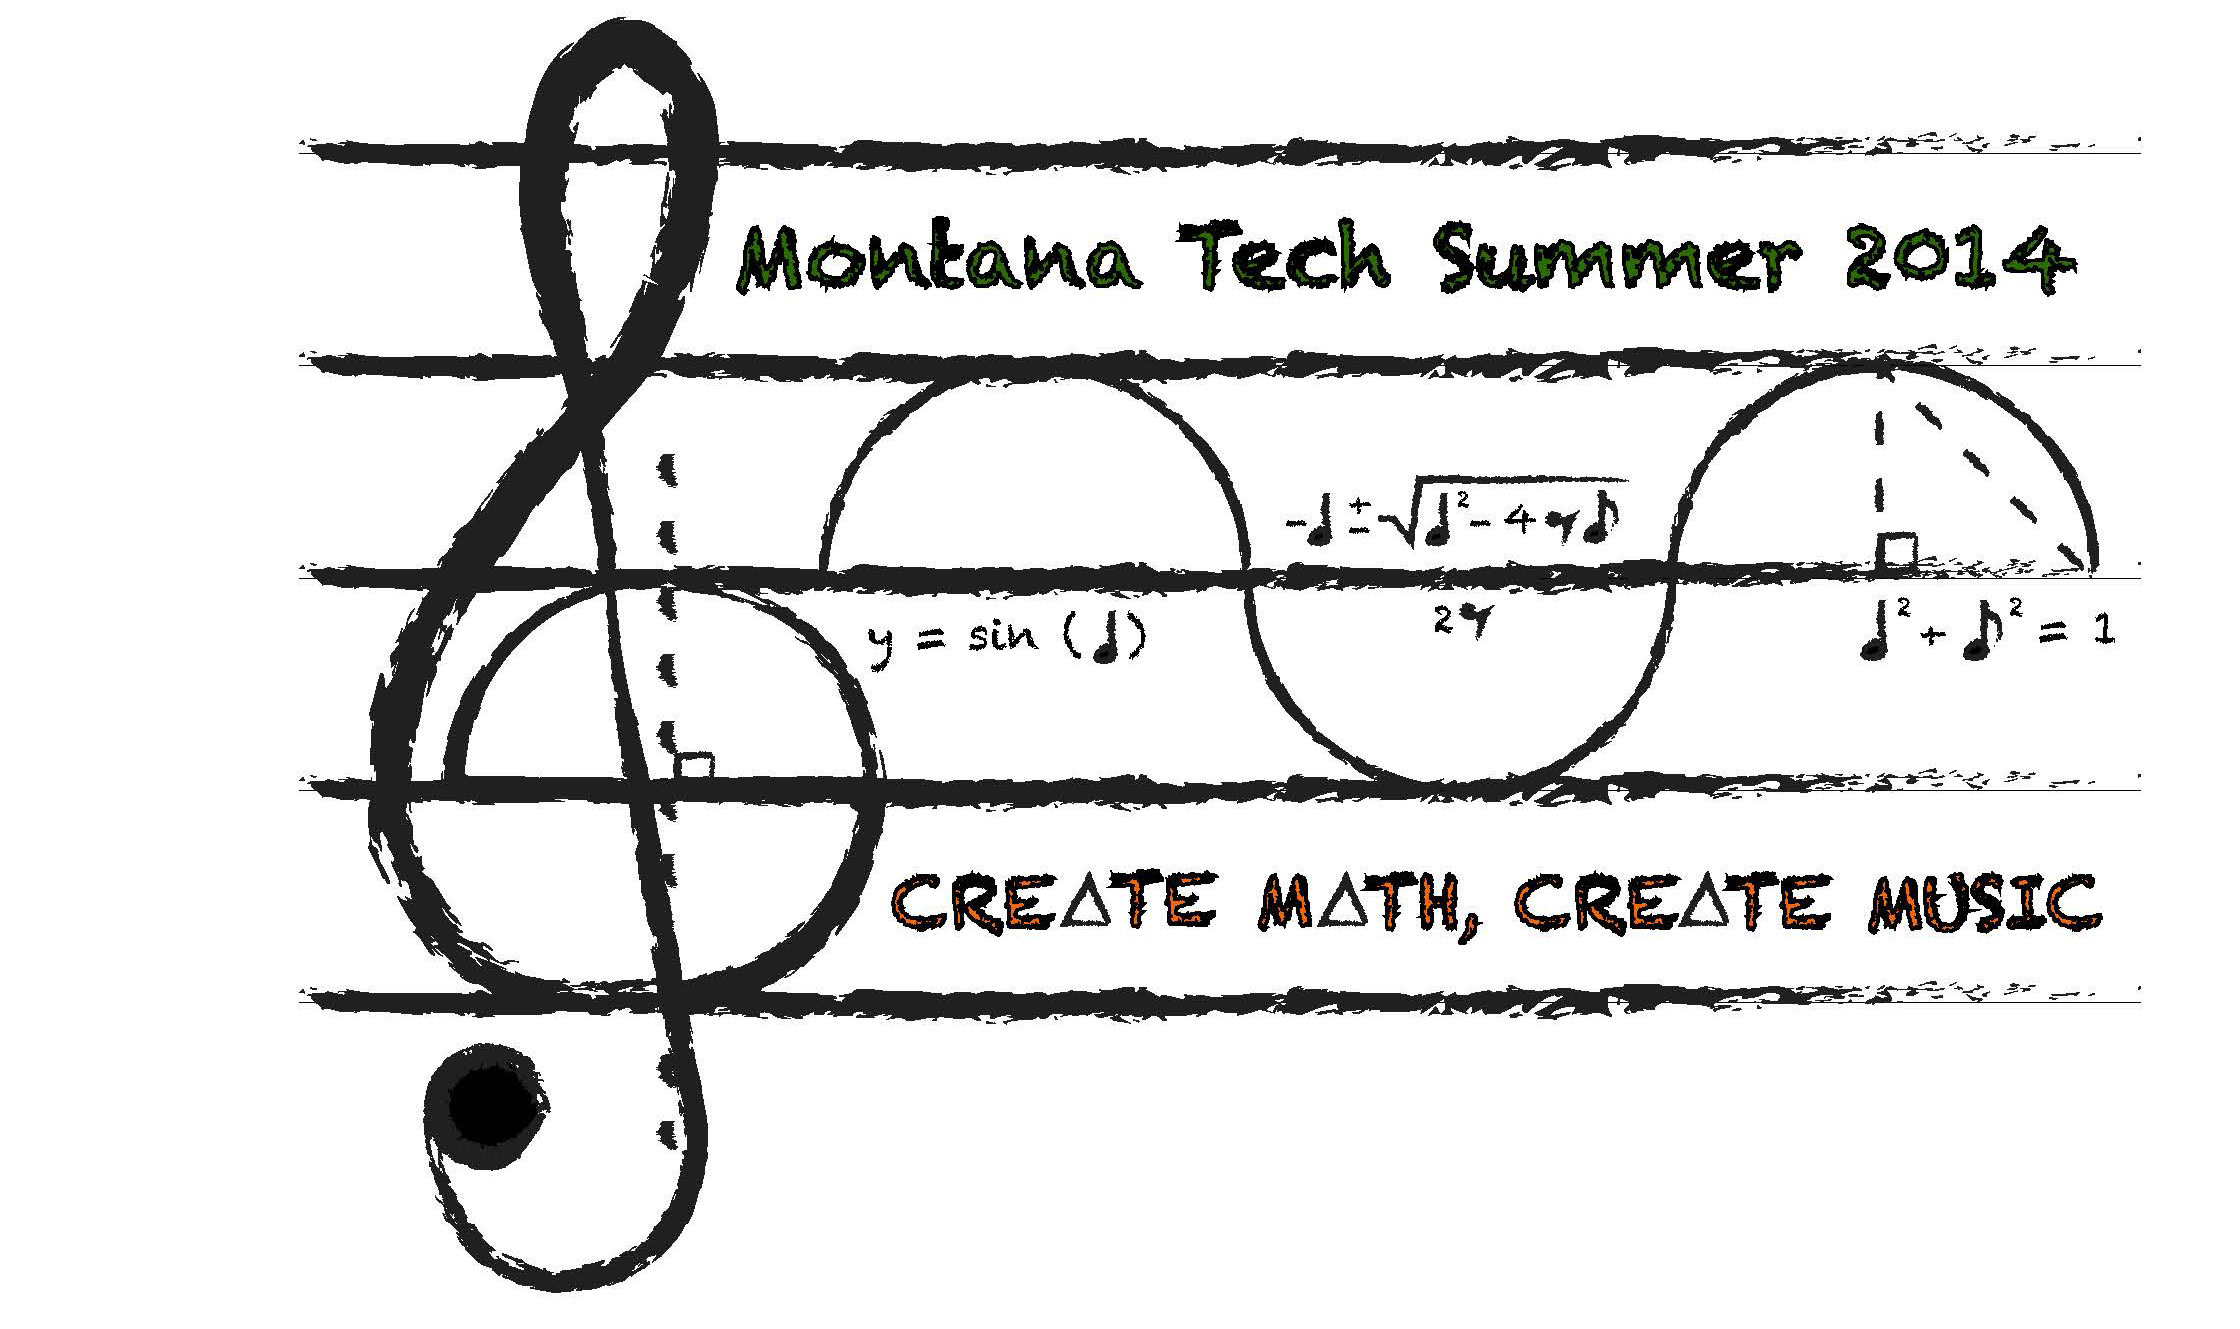 Create Math 2014: Mathematics and Music Summer Experience